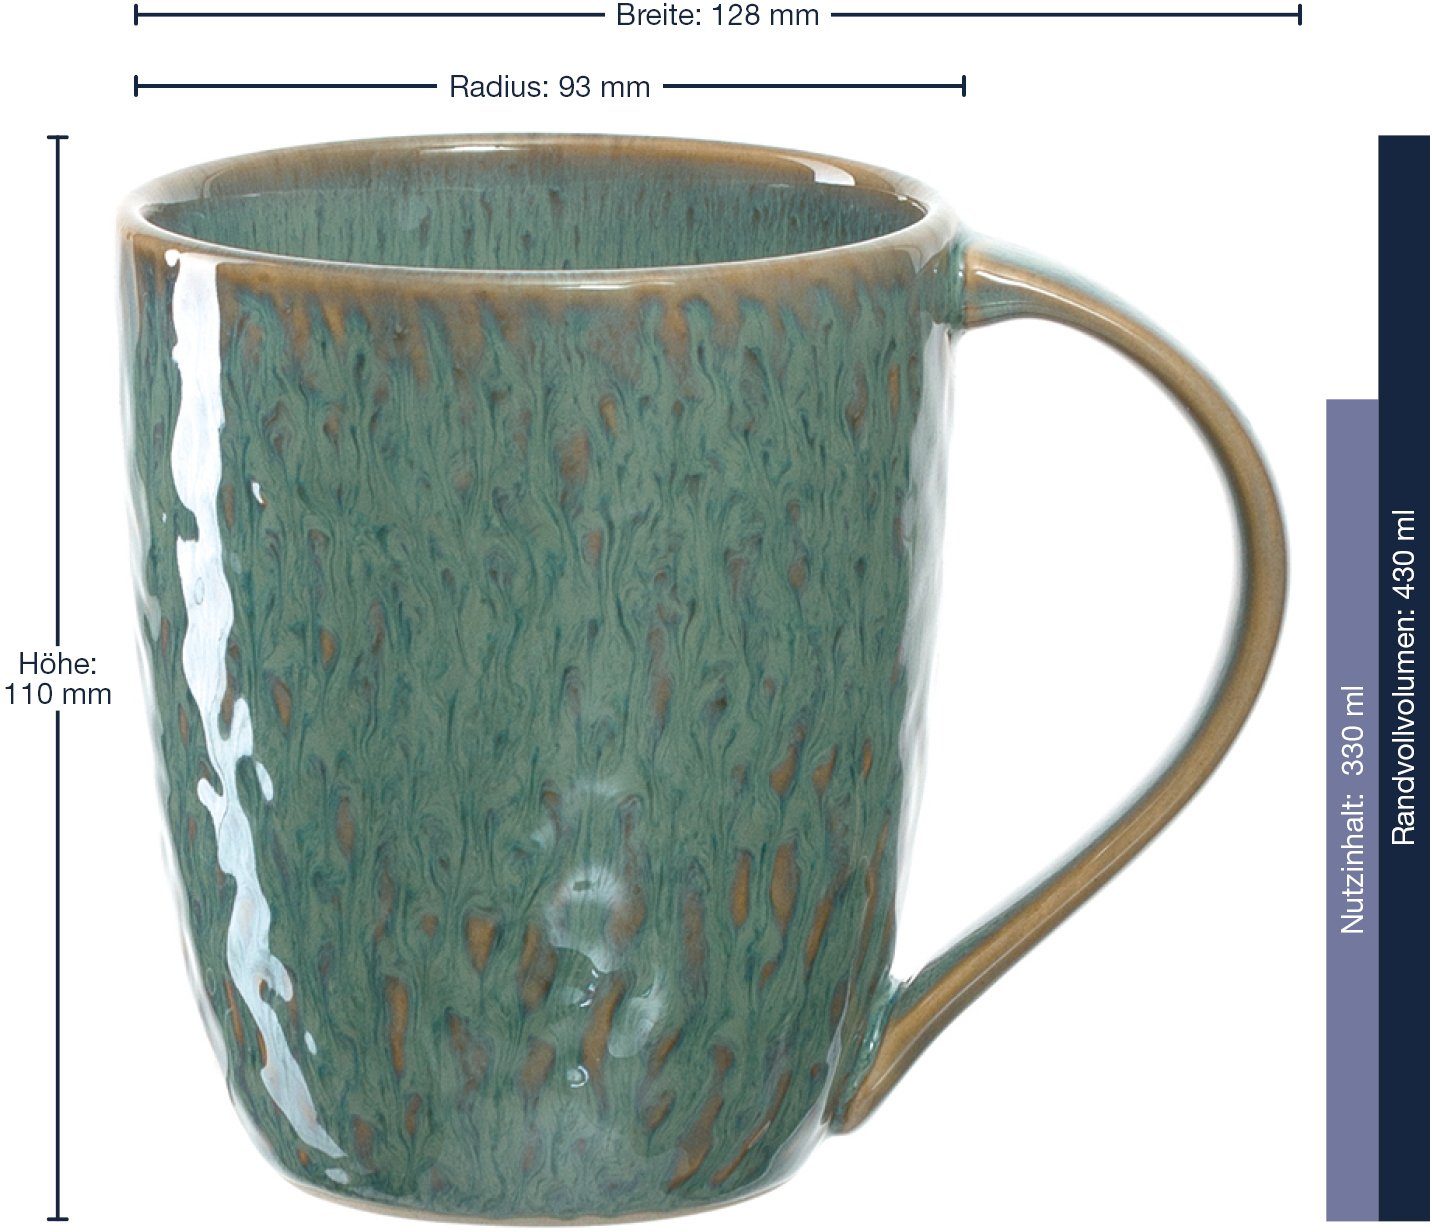 Keramik, grün ml, 430 6-teilig Matera, LEONARDO Becher